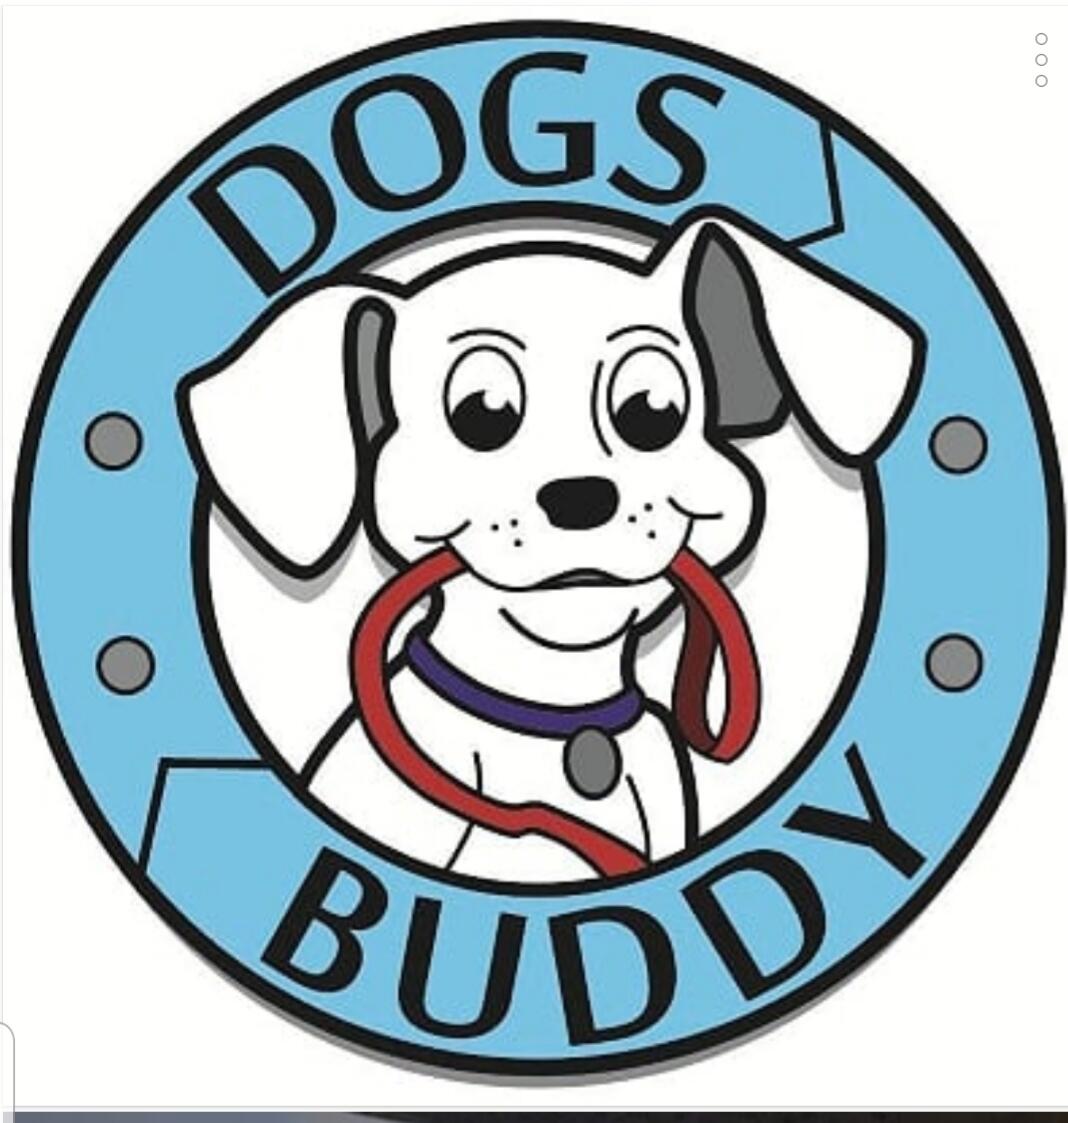 Dogs Buddy - 2 Recommendations - Manchester - Nextdoor